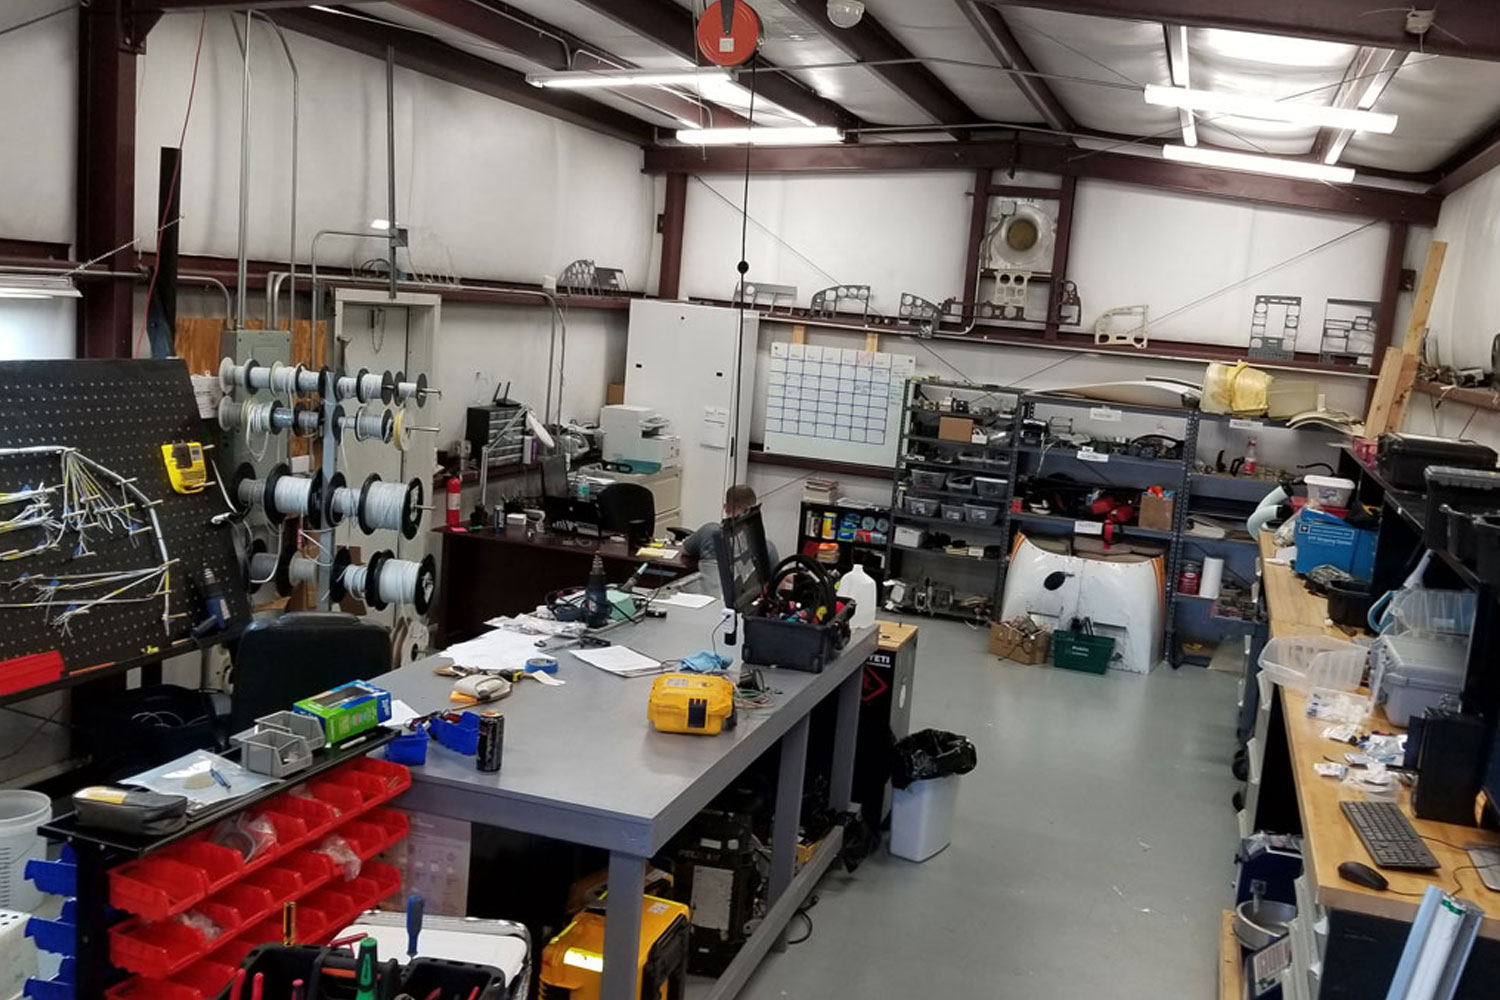 Our Avionics Wiring Shop